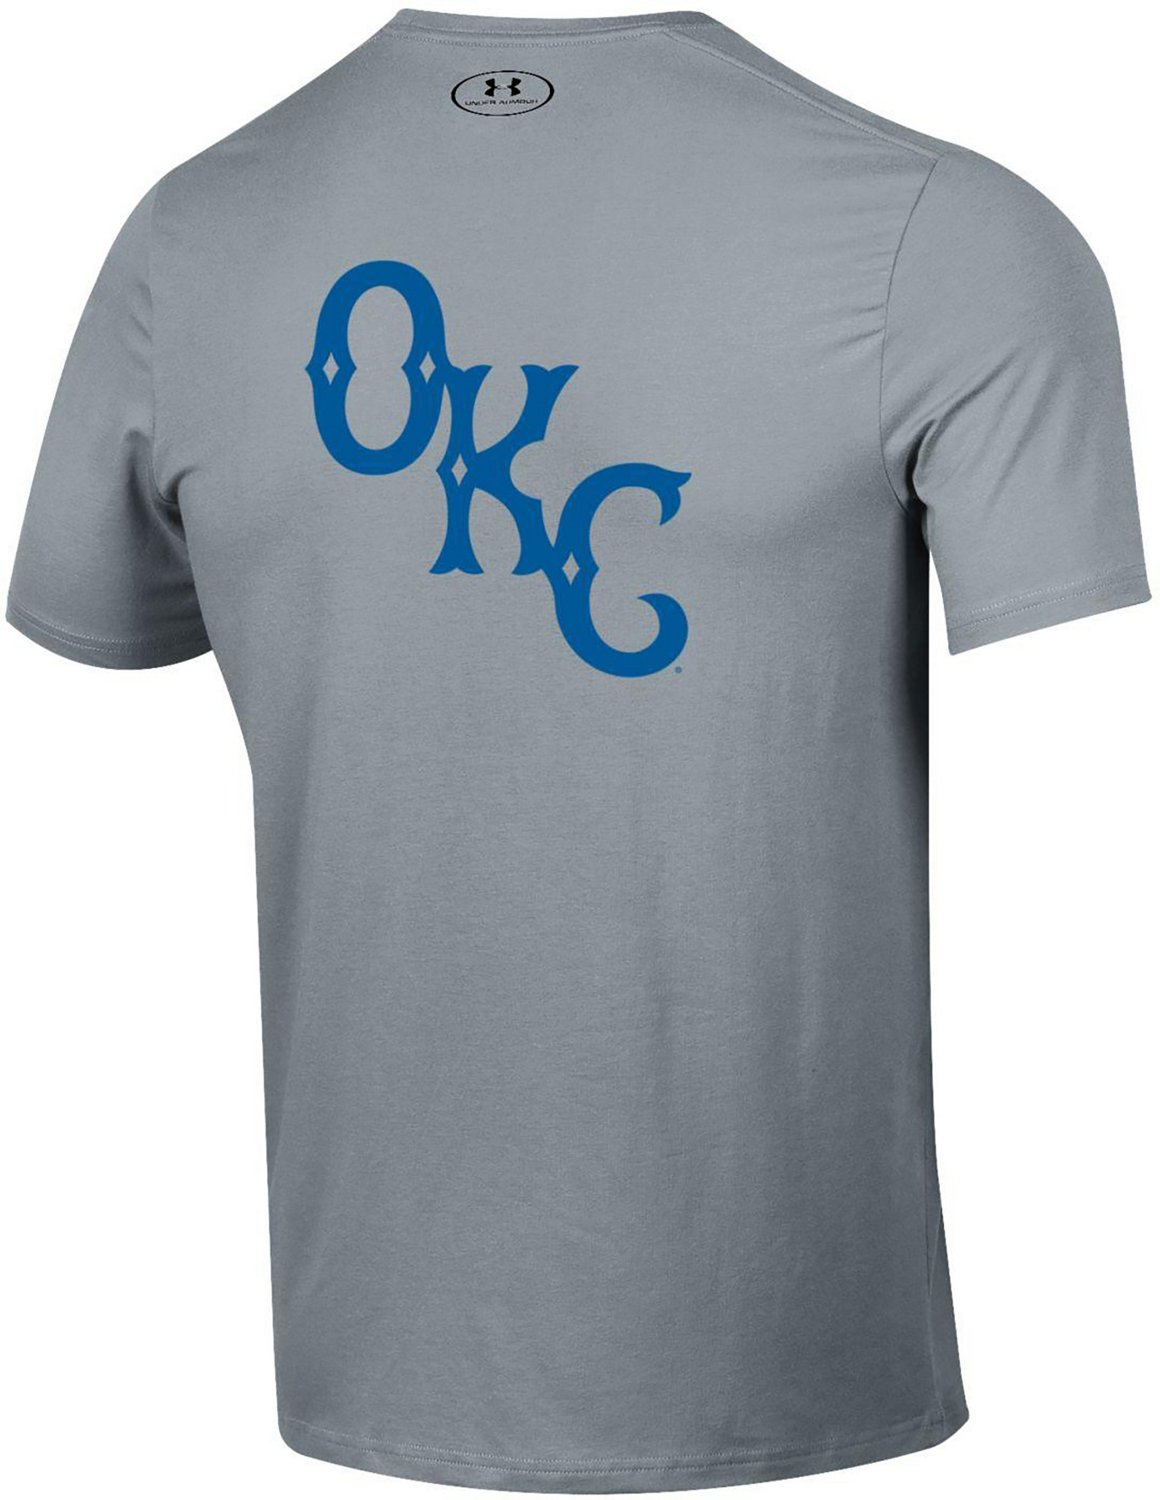 Under Armour Men's Oklahoma City Dodgers Ace Performance T-shirt